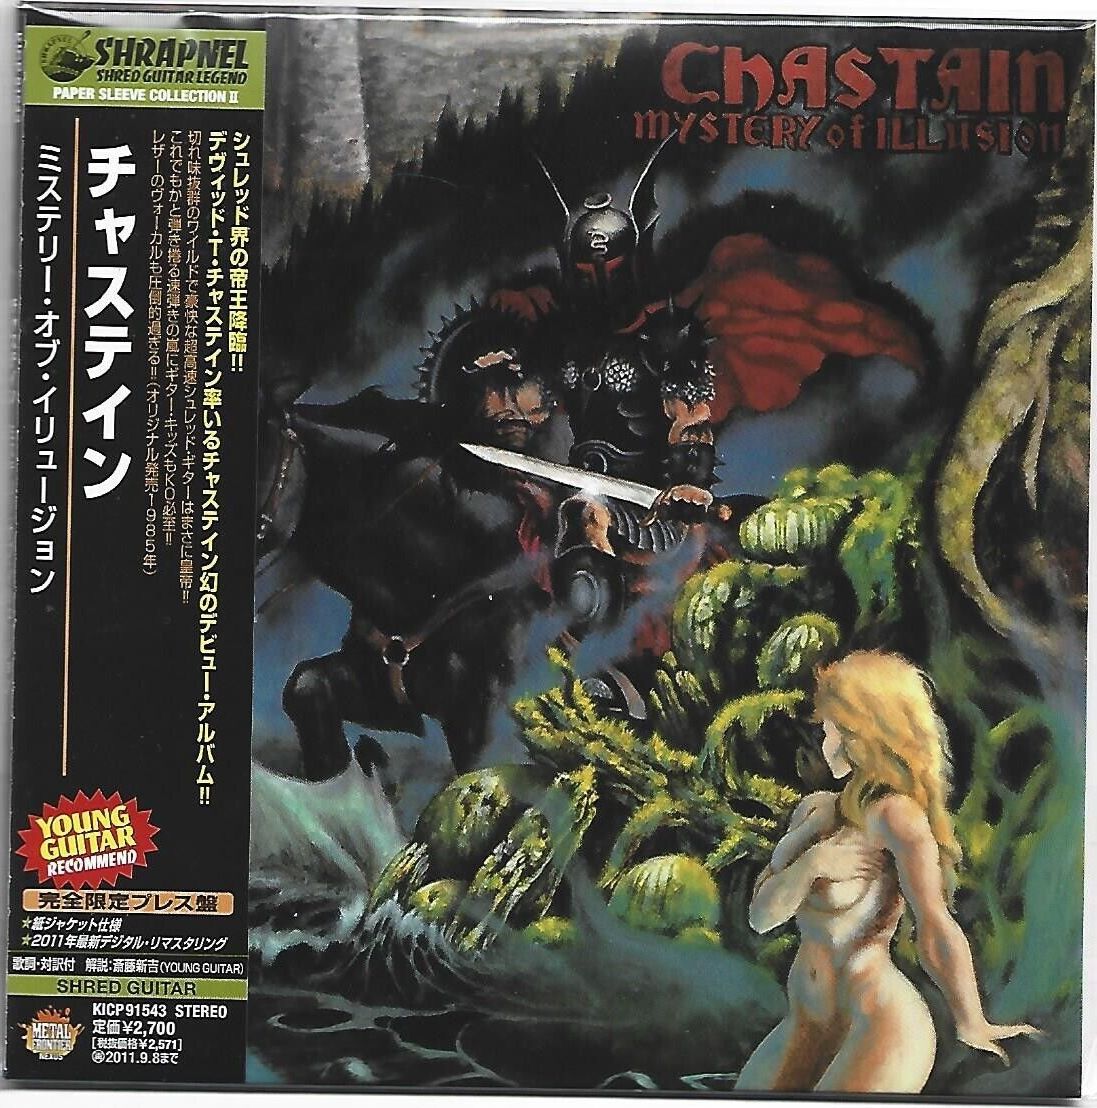 Chastain - Mystery of Illusion - Encyclopaedia Metallum: The Metal